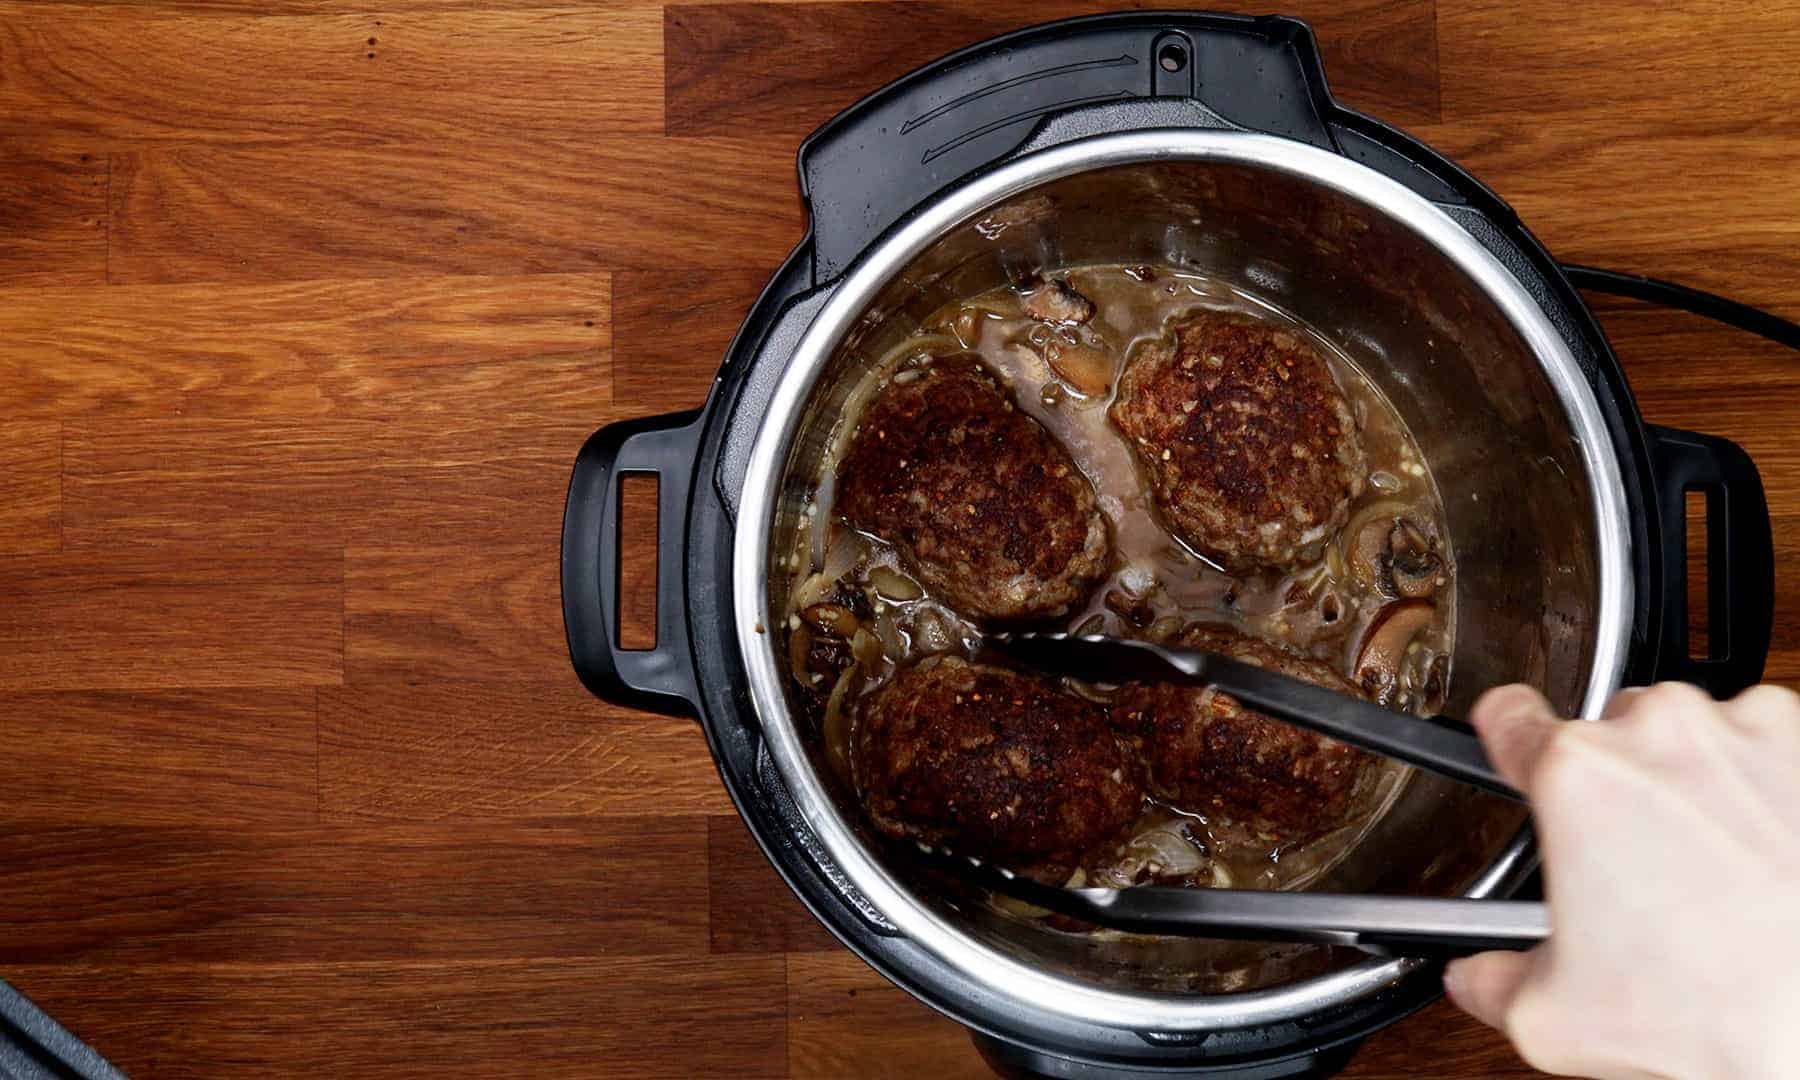 https://www.pressurecookrecipes.com/wp-content/uploads/2020/11/pressure-cook-salisbury-steak.jpg